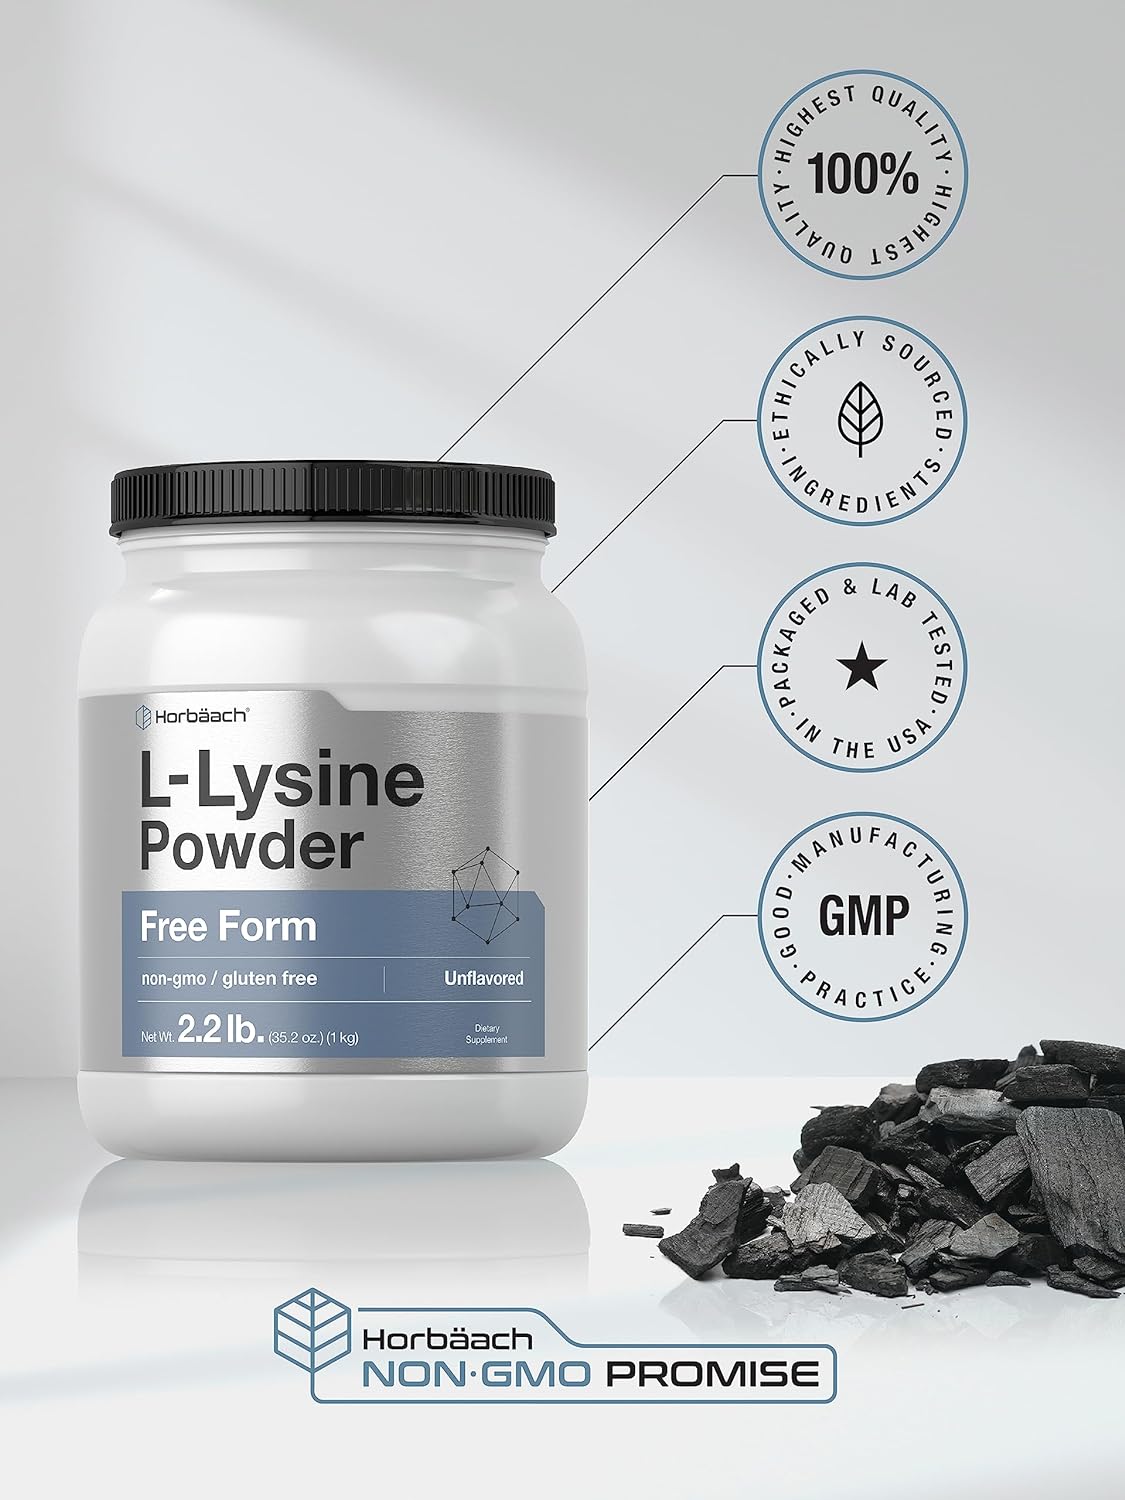 Horbäach L-Lysine Powder | 2.2 lbs | Unflavored Free Form Supplement | Vegetarian, Non-GMO, Gluten Free Formula : Health & Household